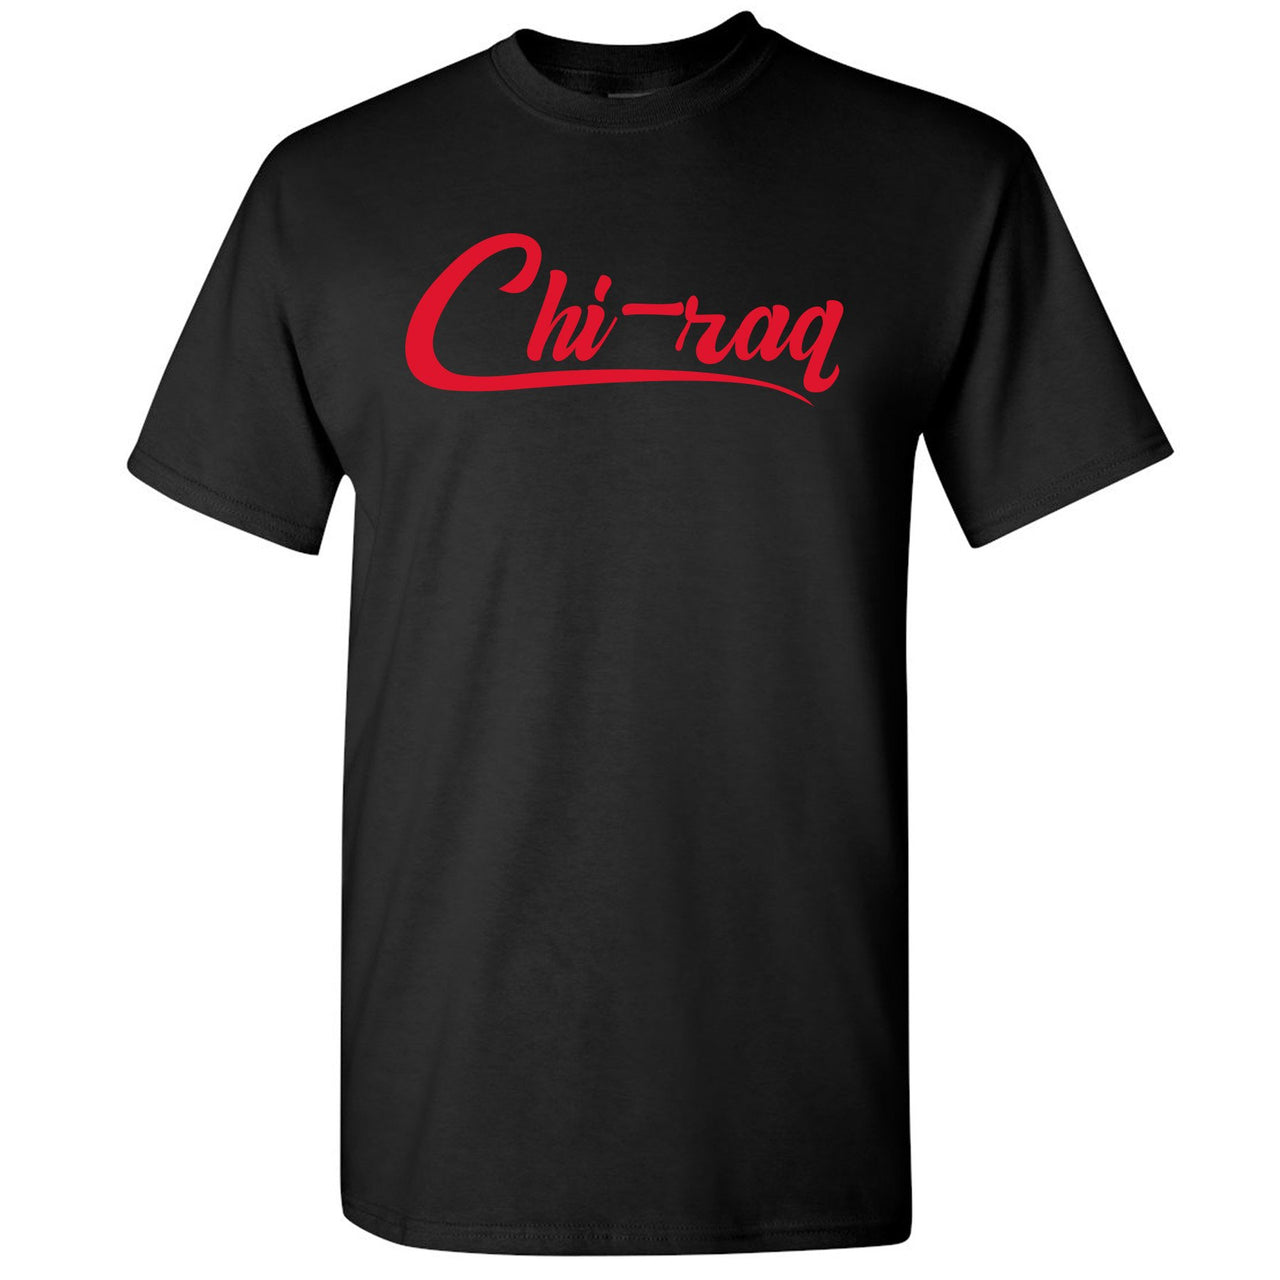 Bred 2019 4s T Shirt | Chiraq, Black